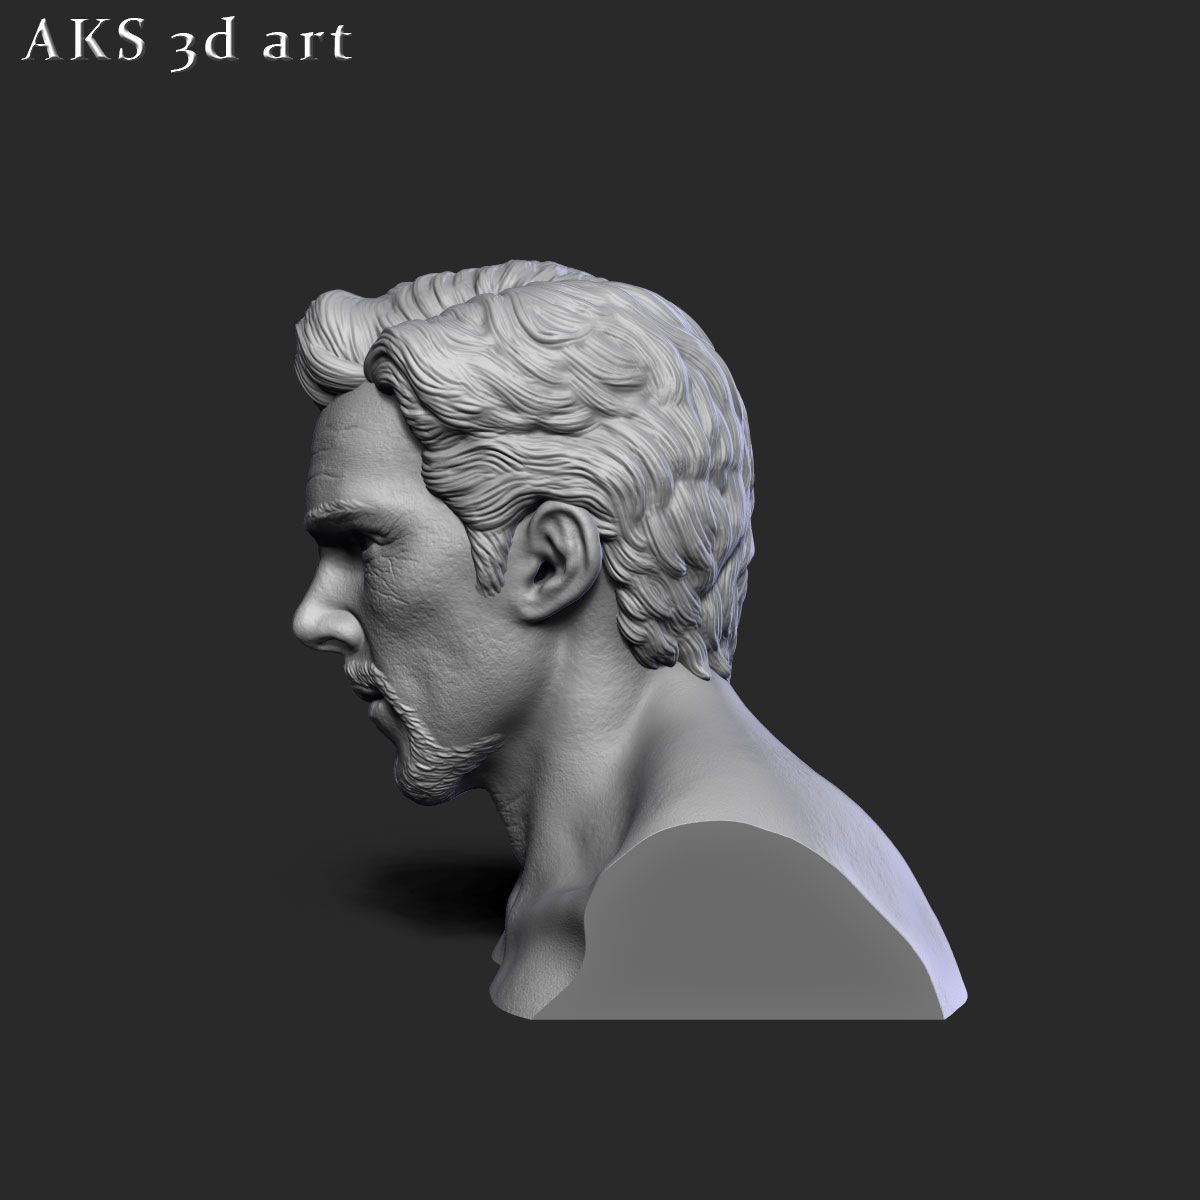 Gee tcmr ome Archivo 3D arte de la escultura facial de benedict cumberbatch・Modelo imprimible en 3D para descargar, AS_3d_art